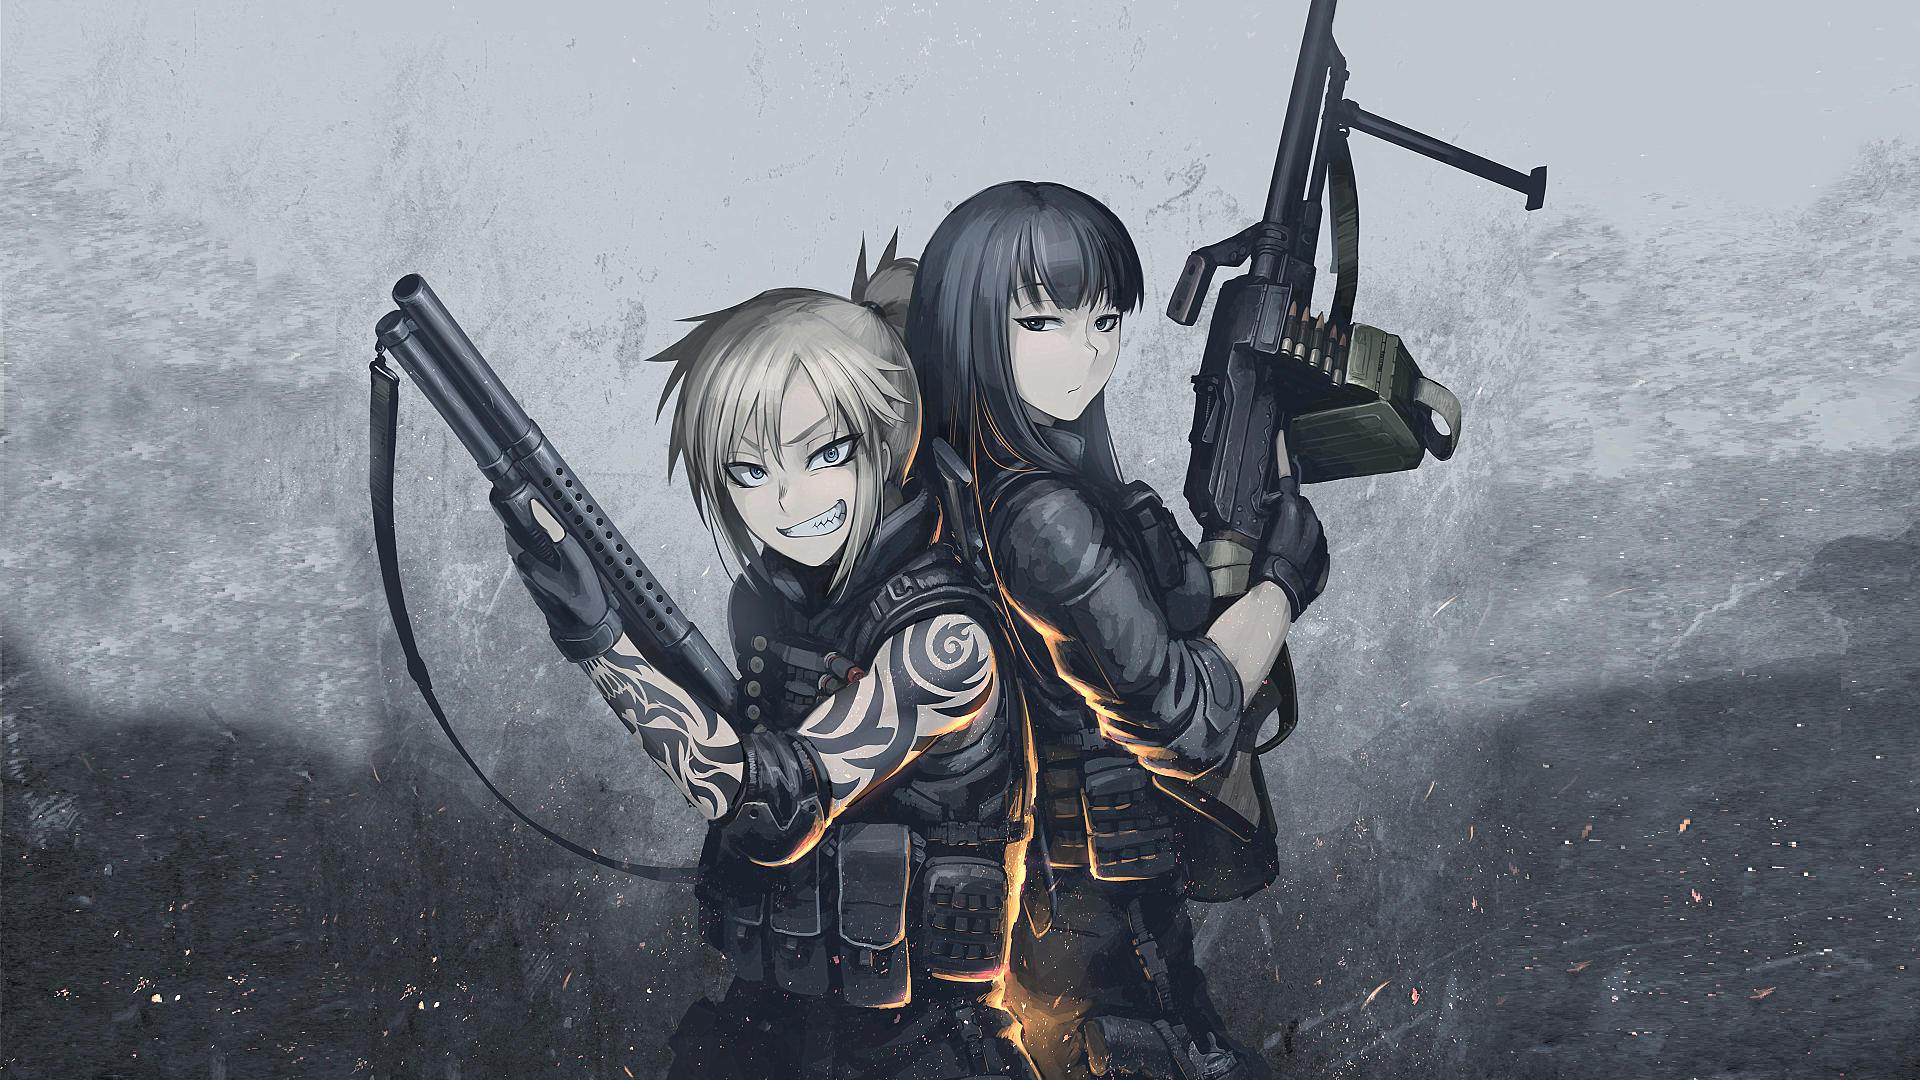 Anime 1920x1080 anime anime girls machine gun Hetza warrior Pixiv girls with guns weapon two women inked girls shotgun looking at viewer